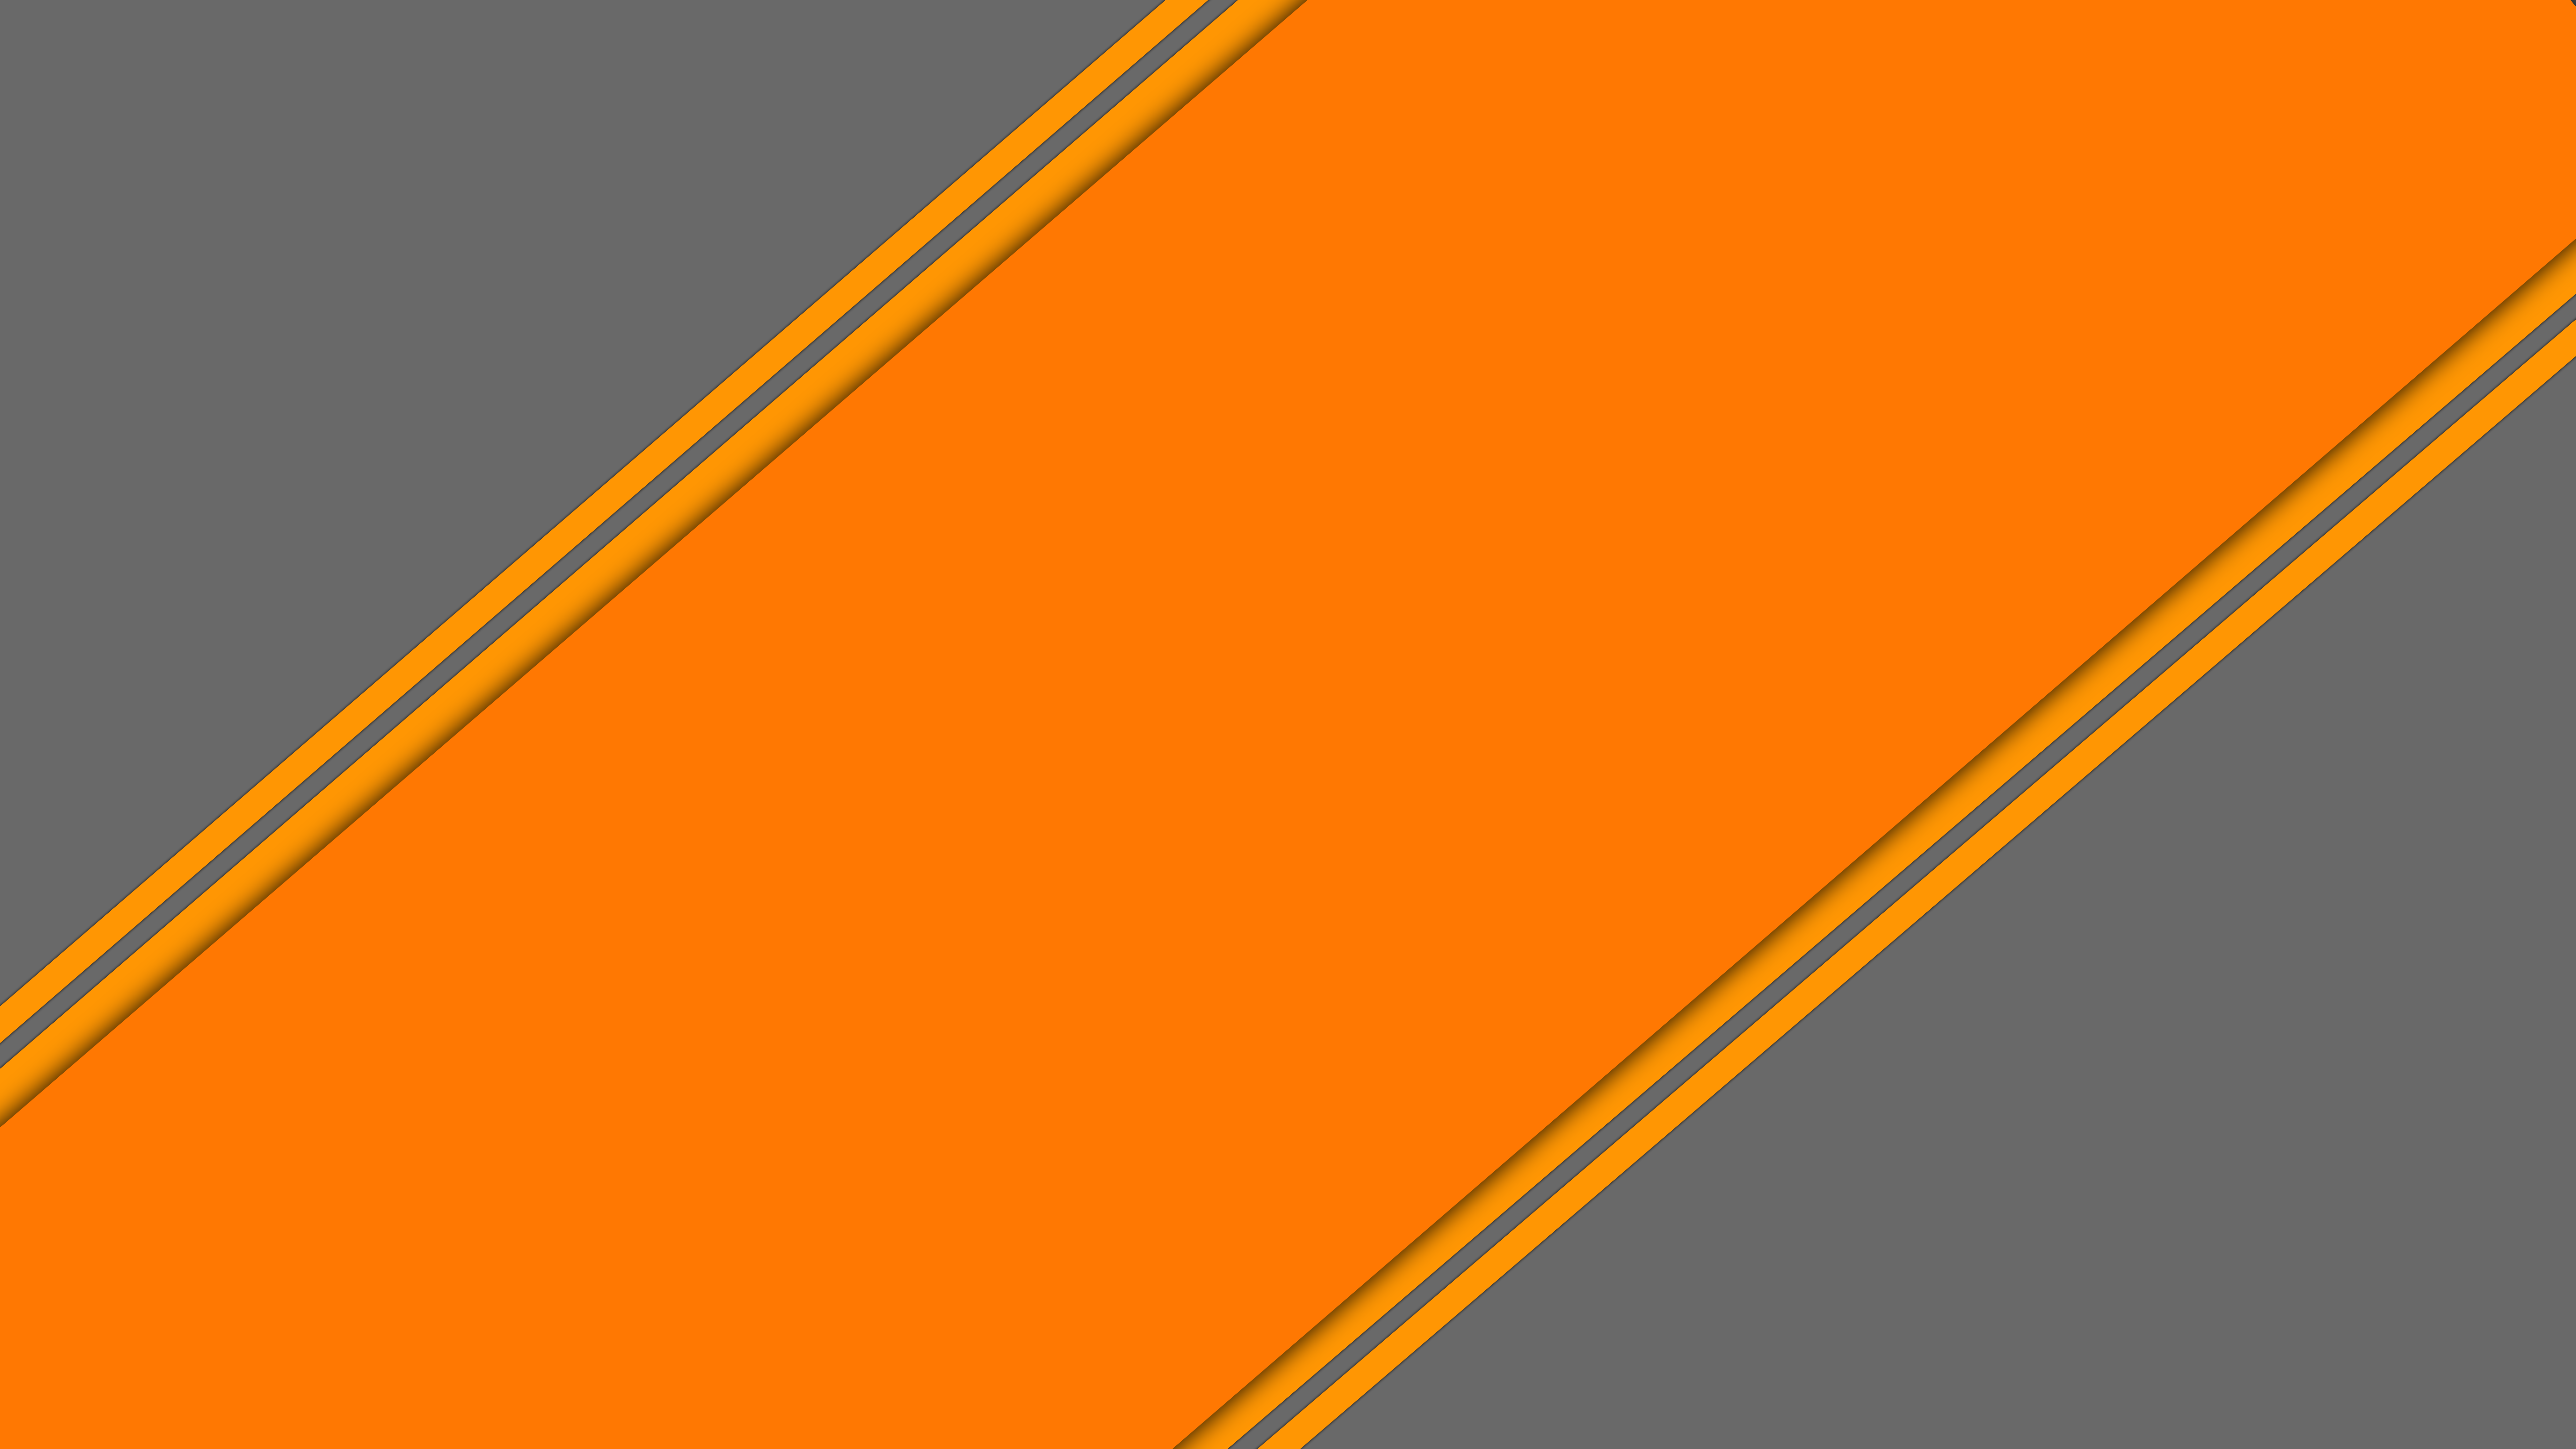 General 7680x4320 pattern orange minimalism